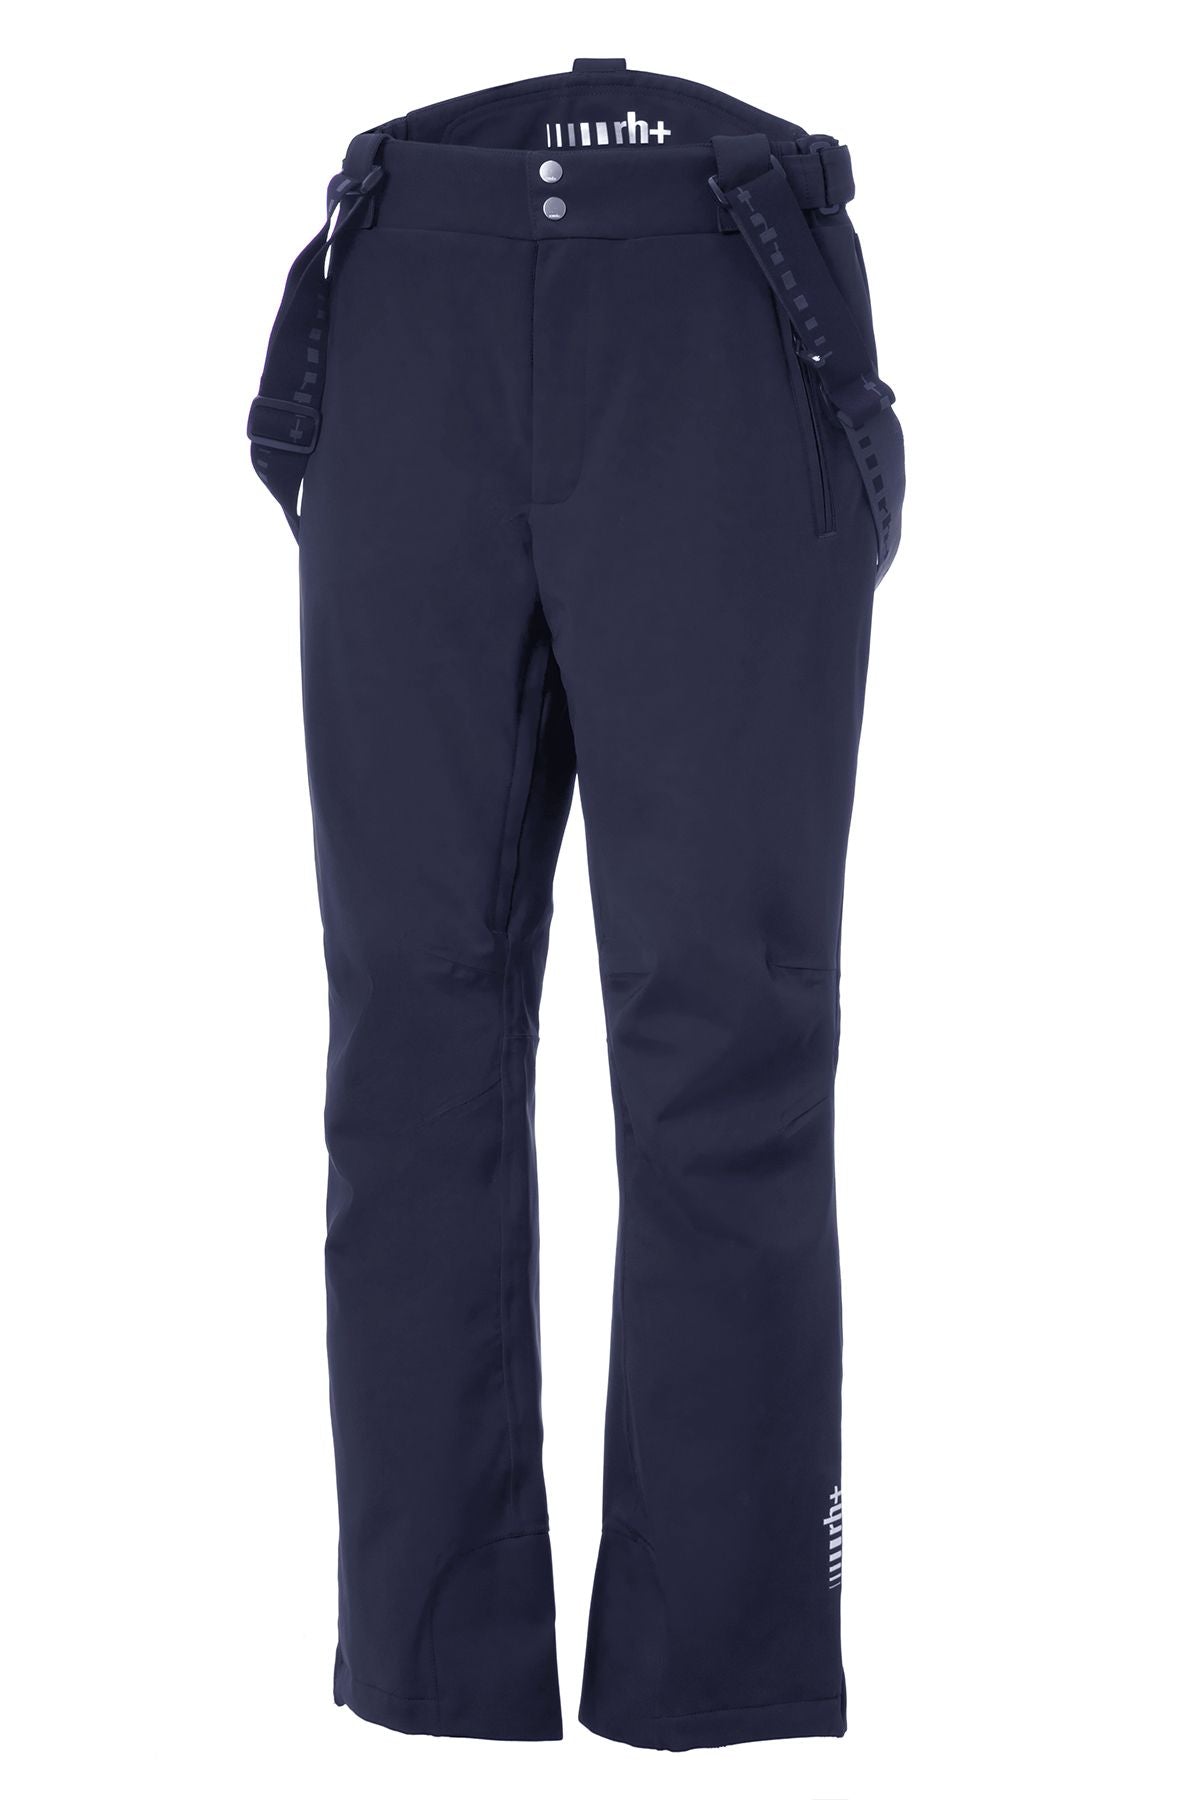 Rh+ Power Eco Pants - Pantaloni Sci Uomo - Neverland Firenze